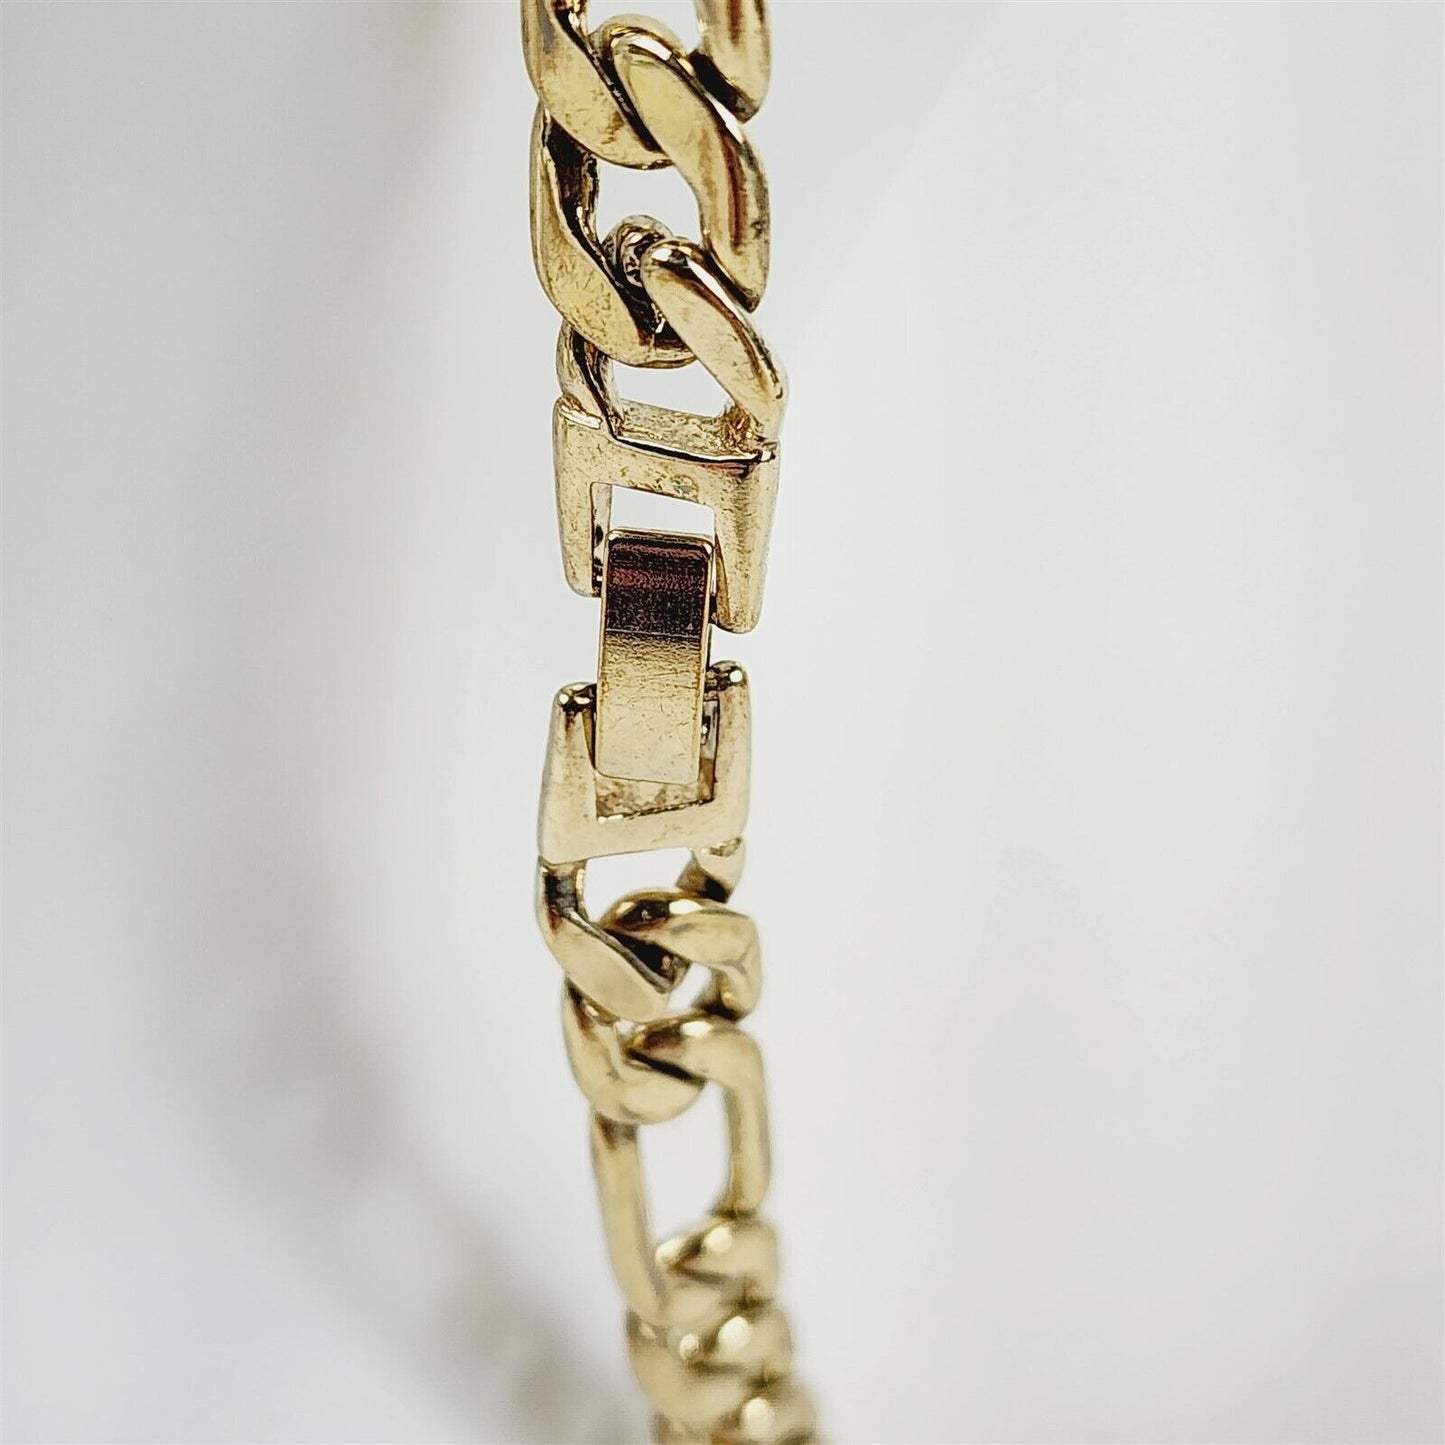 14K Gold Plated Anklet Ankle Bracelet Bevelled Figaro 7.5mm Chain - 13"